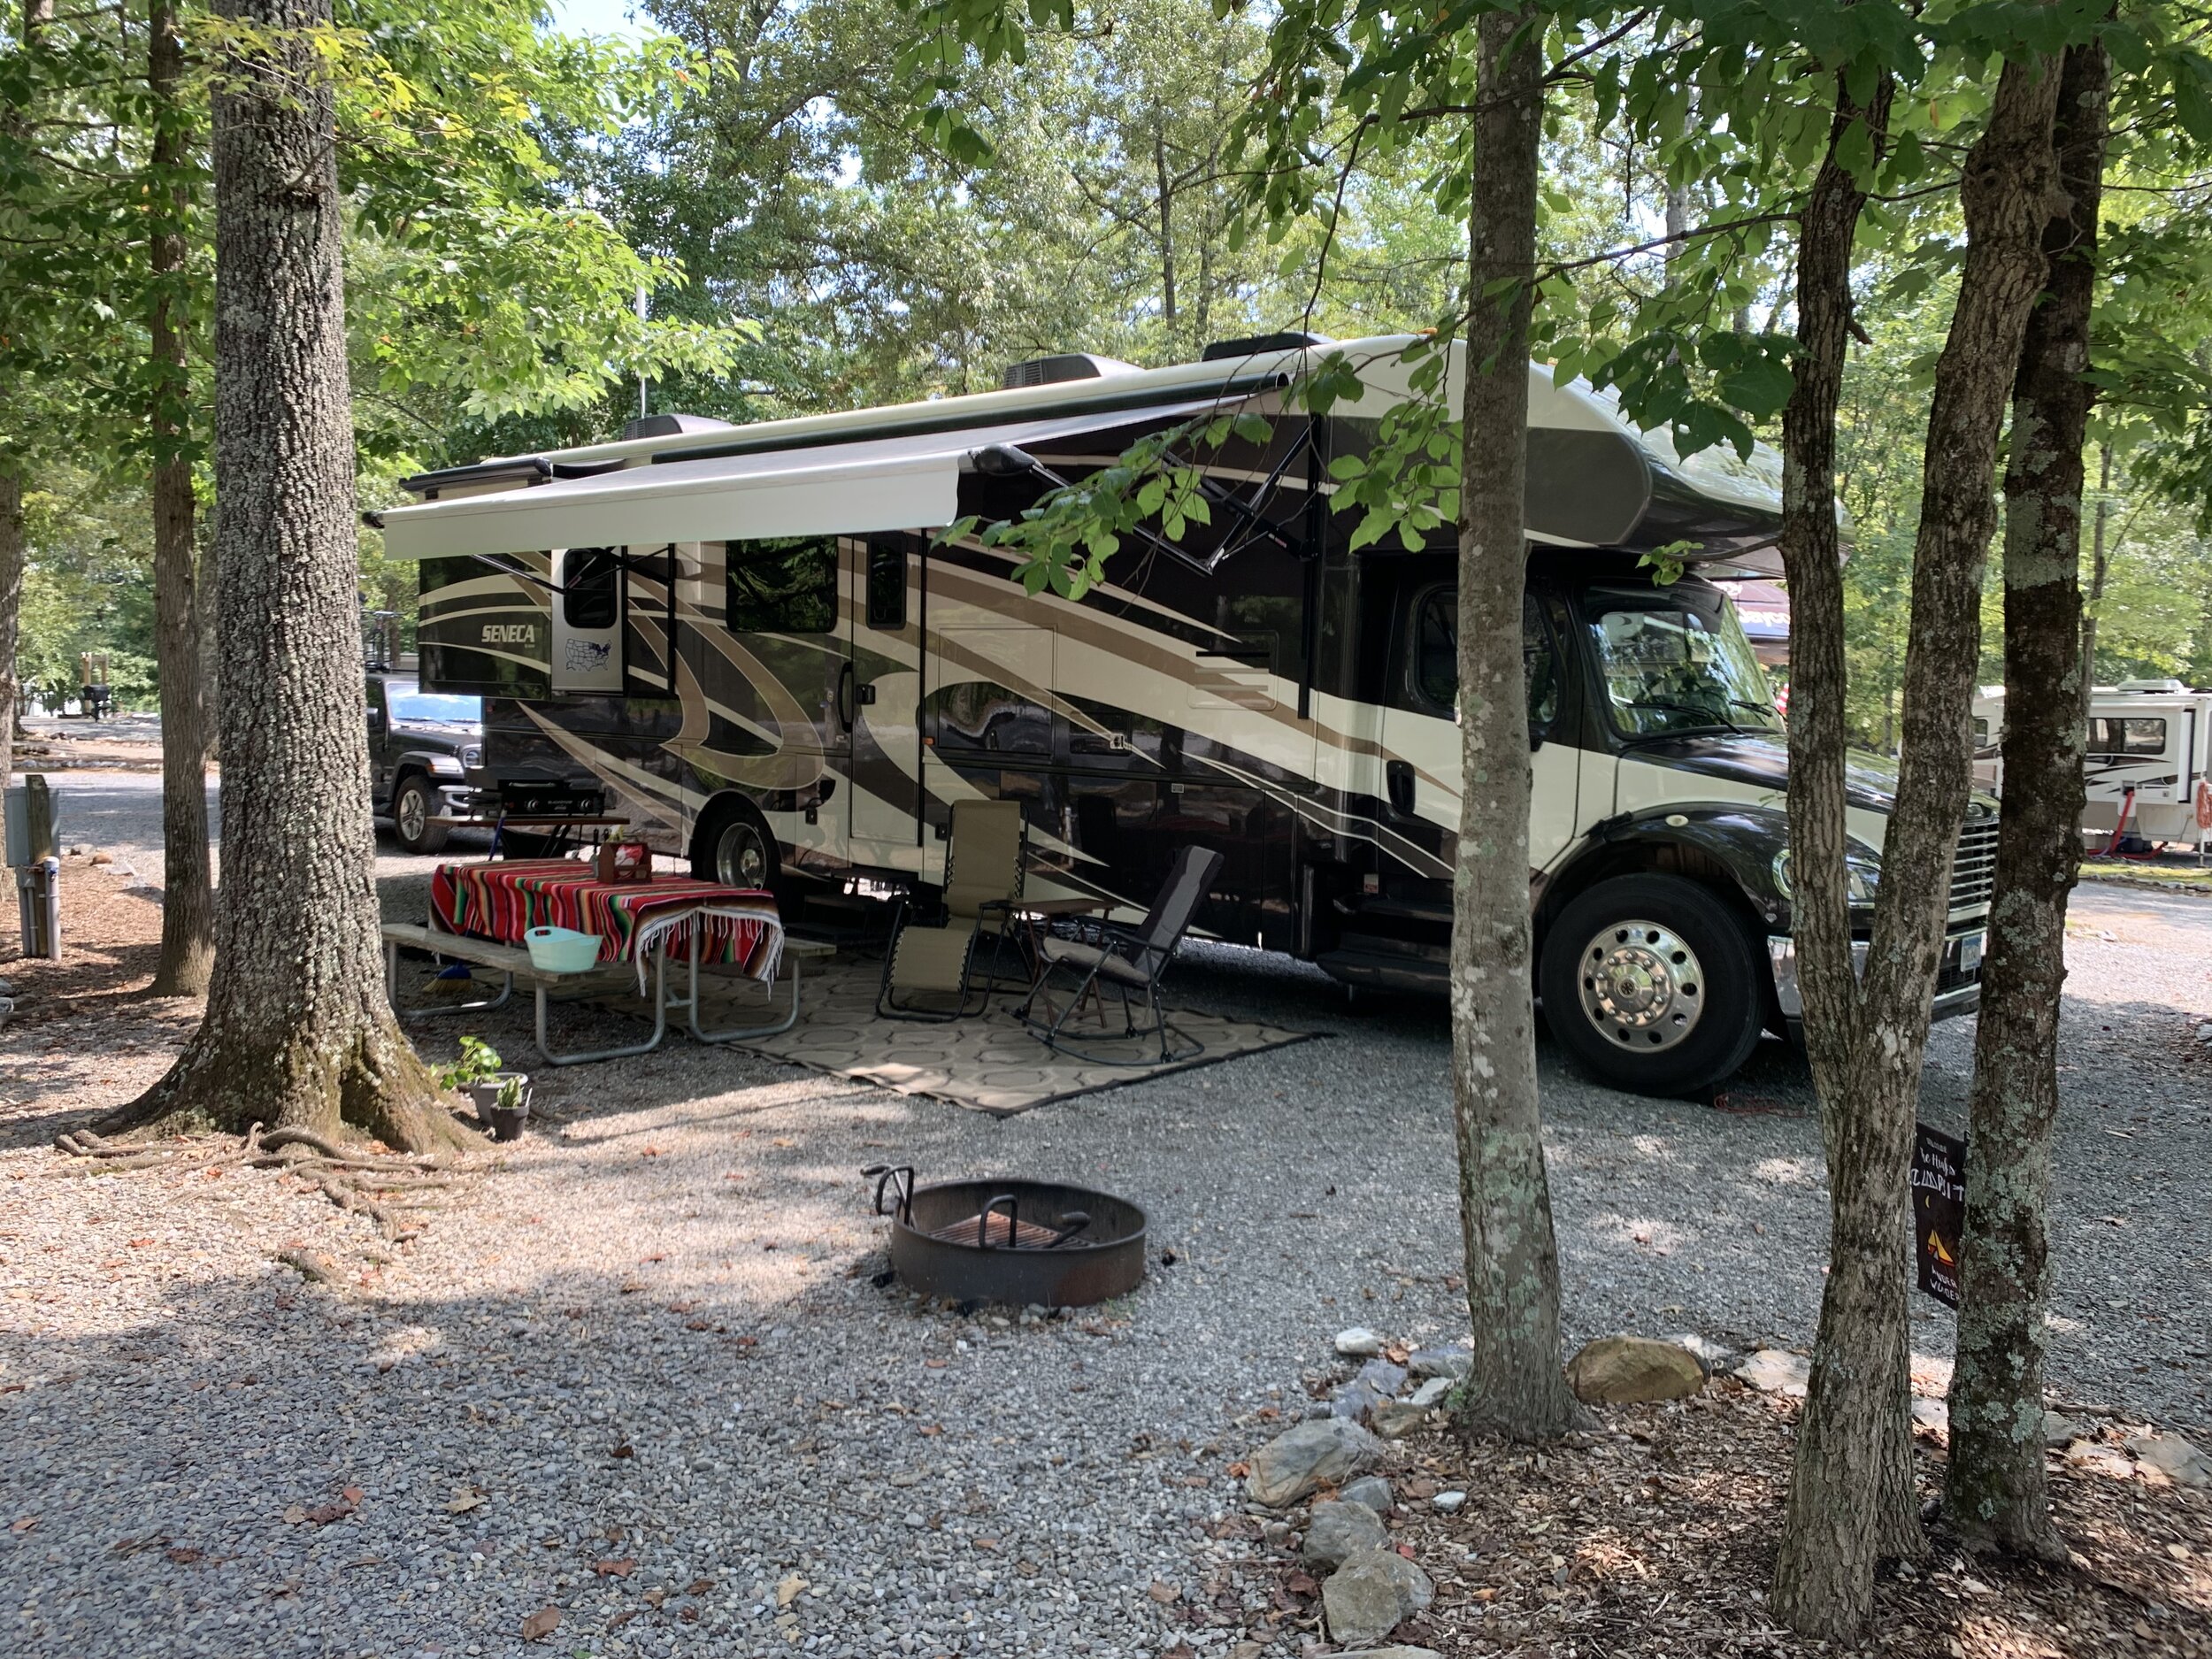 Our KOA campsite in Lynchburg